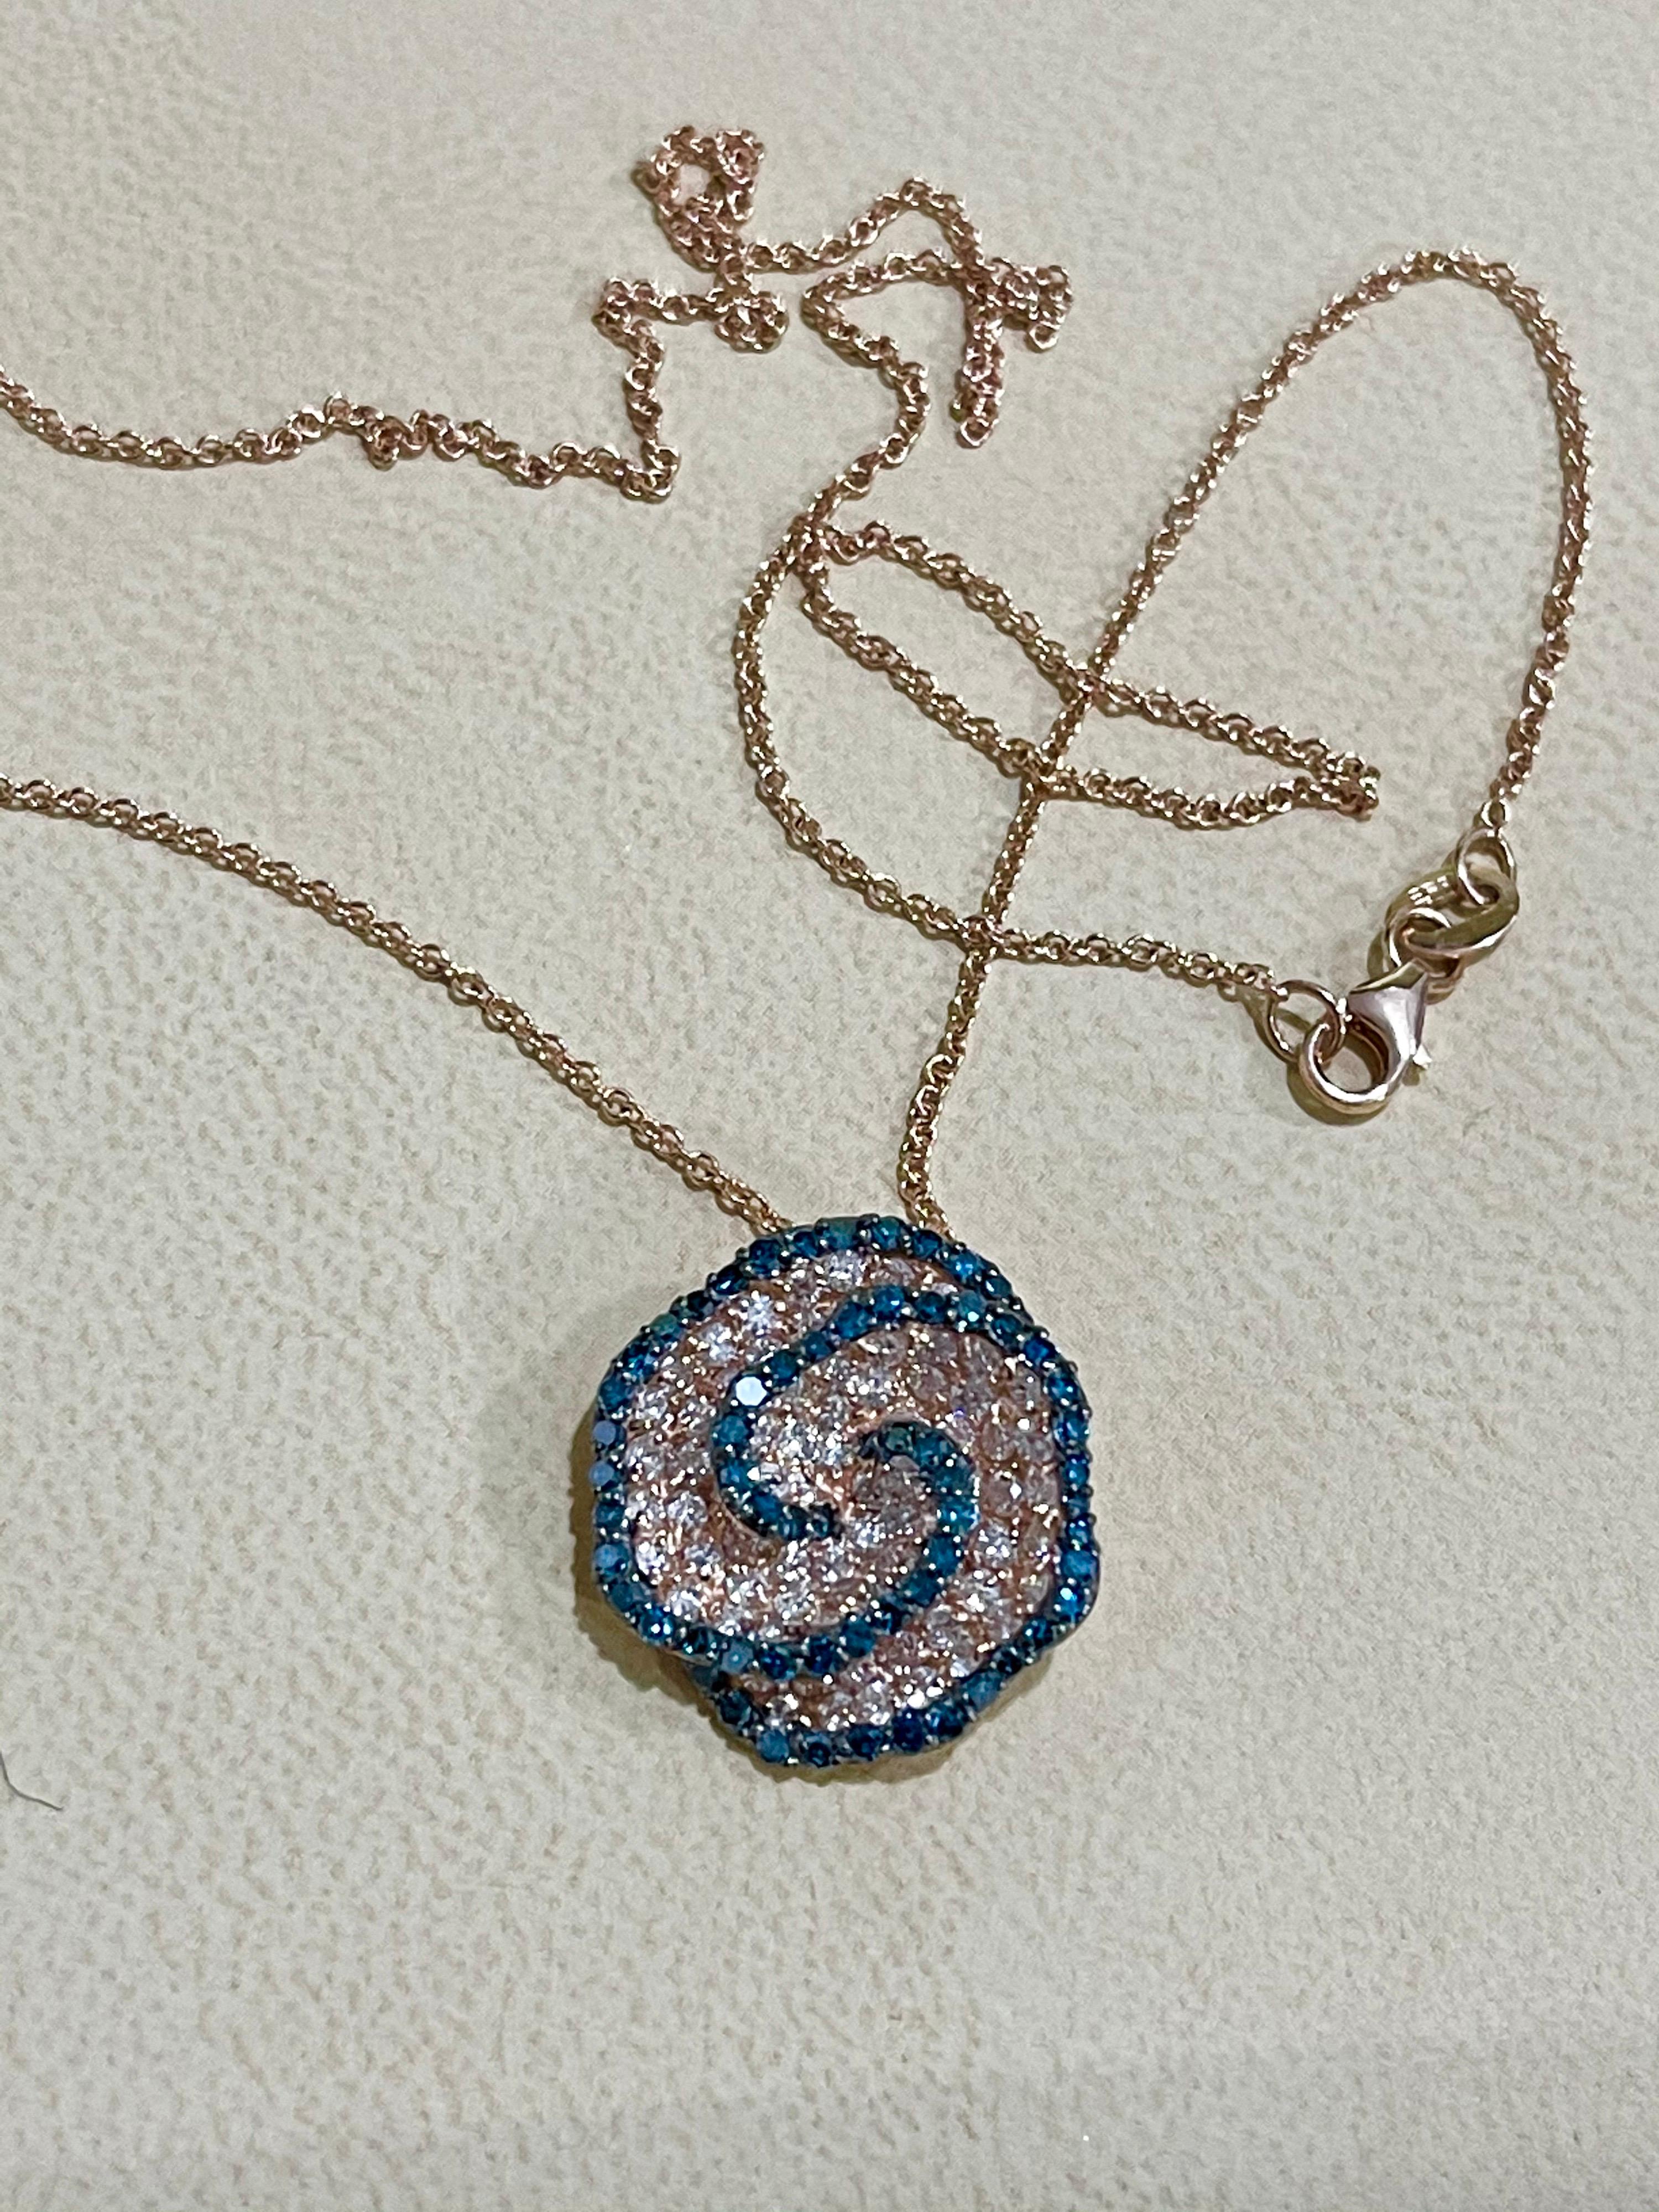 Round Cut Designer Effy's Blue and White Diamond Celtic Pendant /Necklace 14 Karat Gold